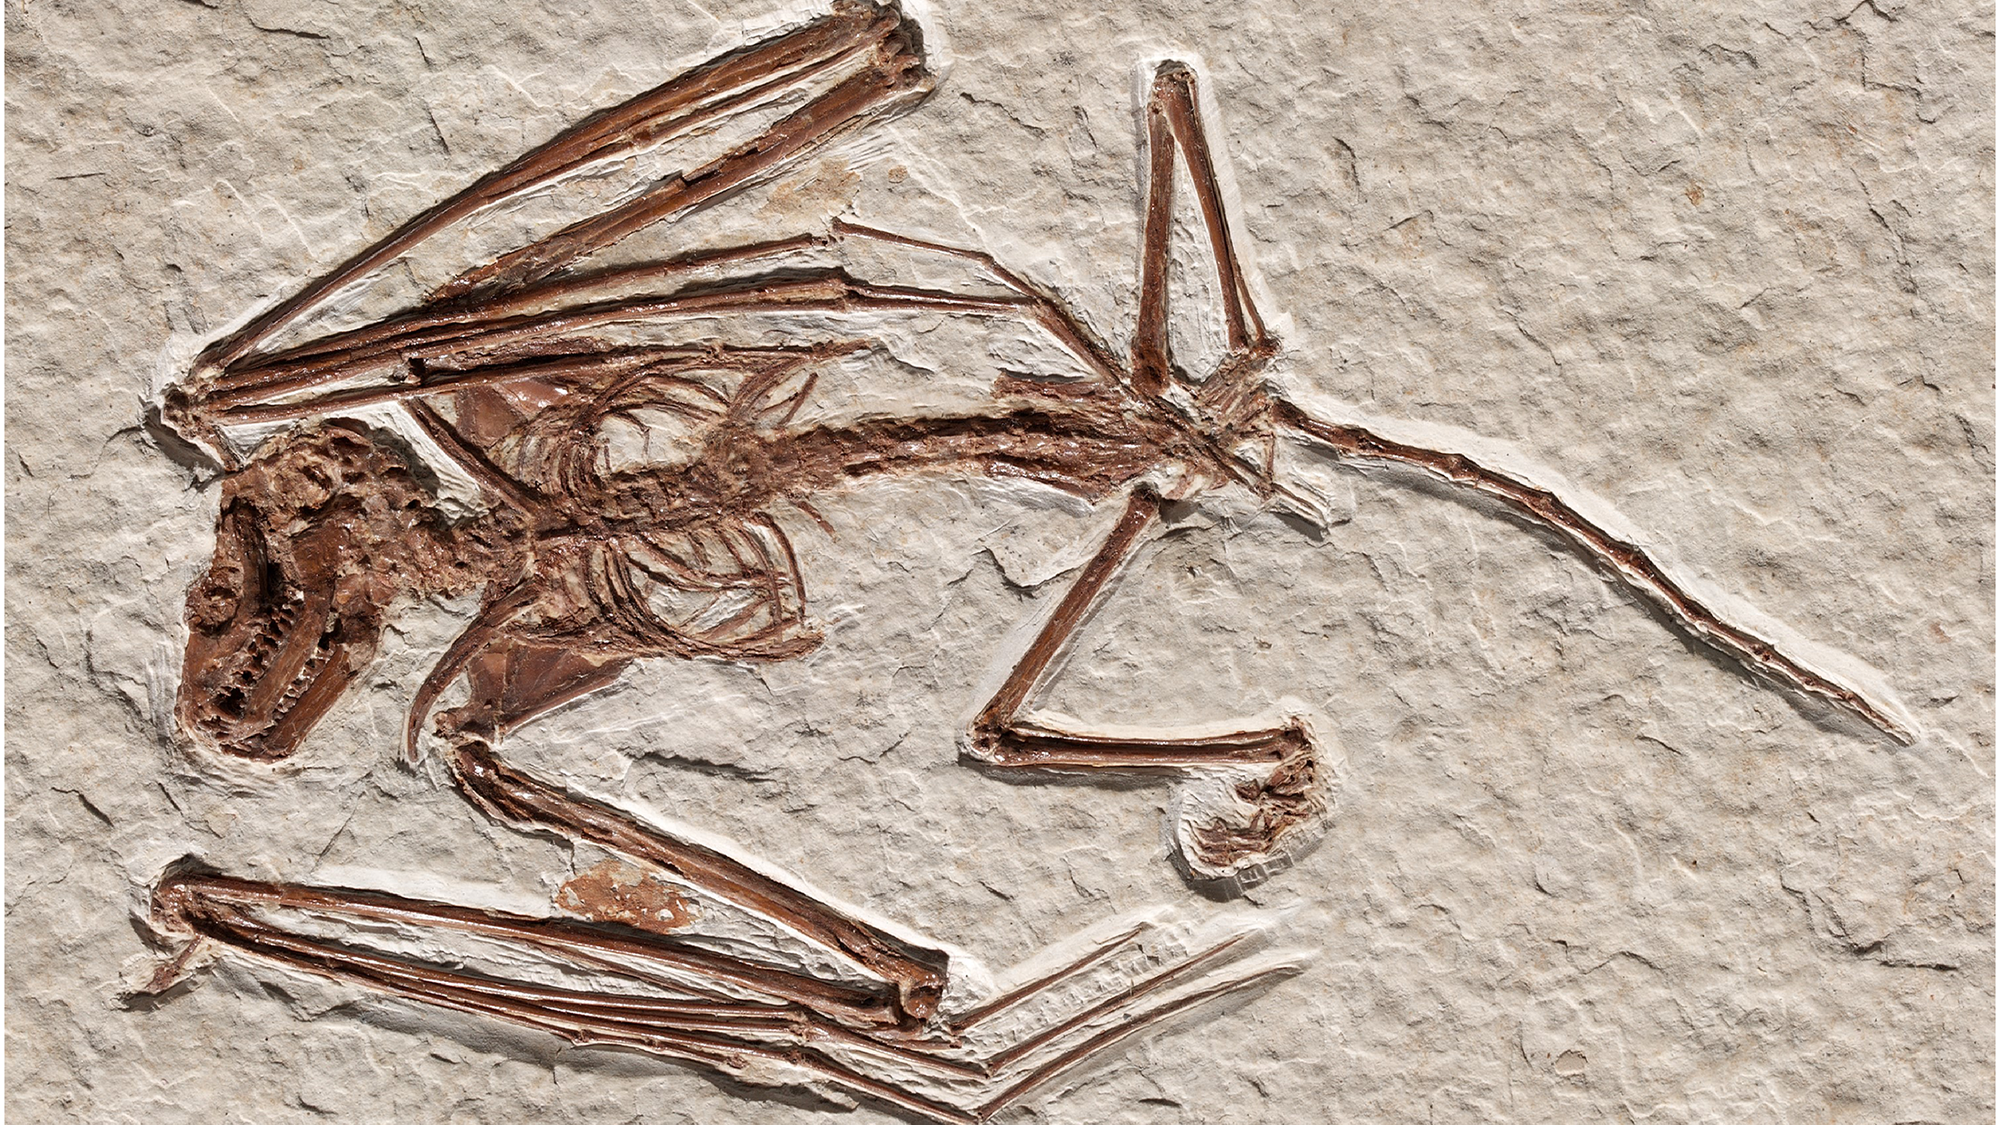 Oldest bat skeleton ever found by paleontologists finally has a name